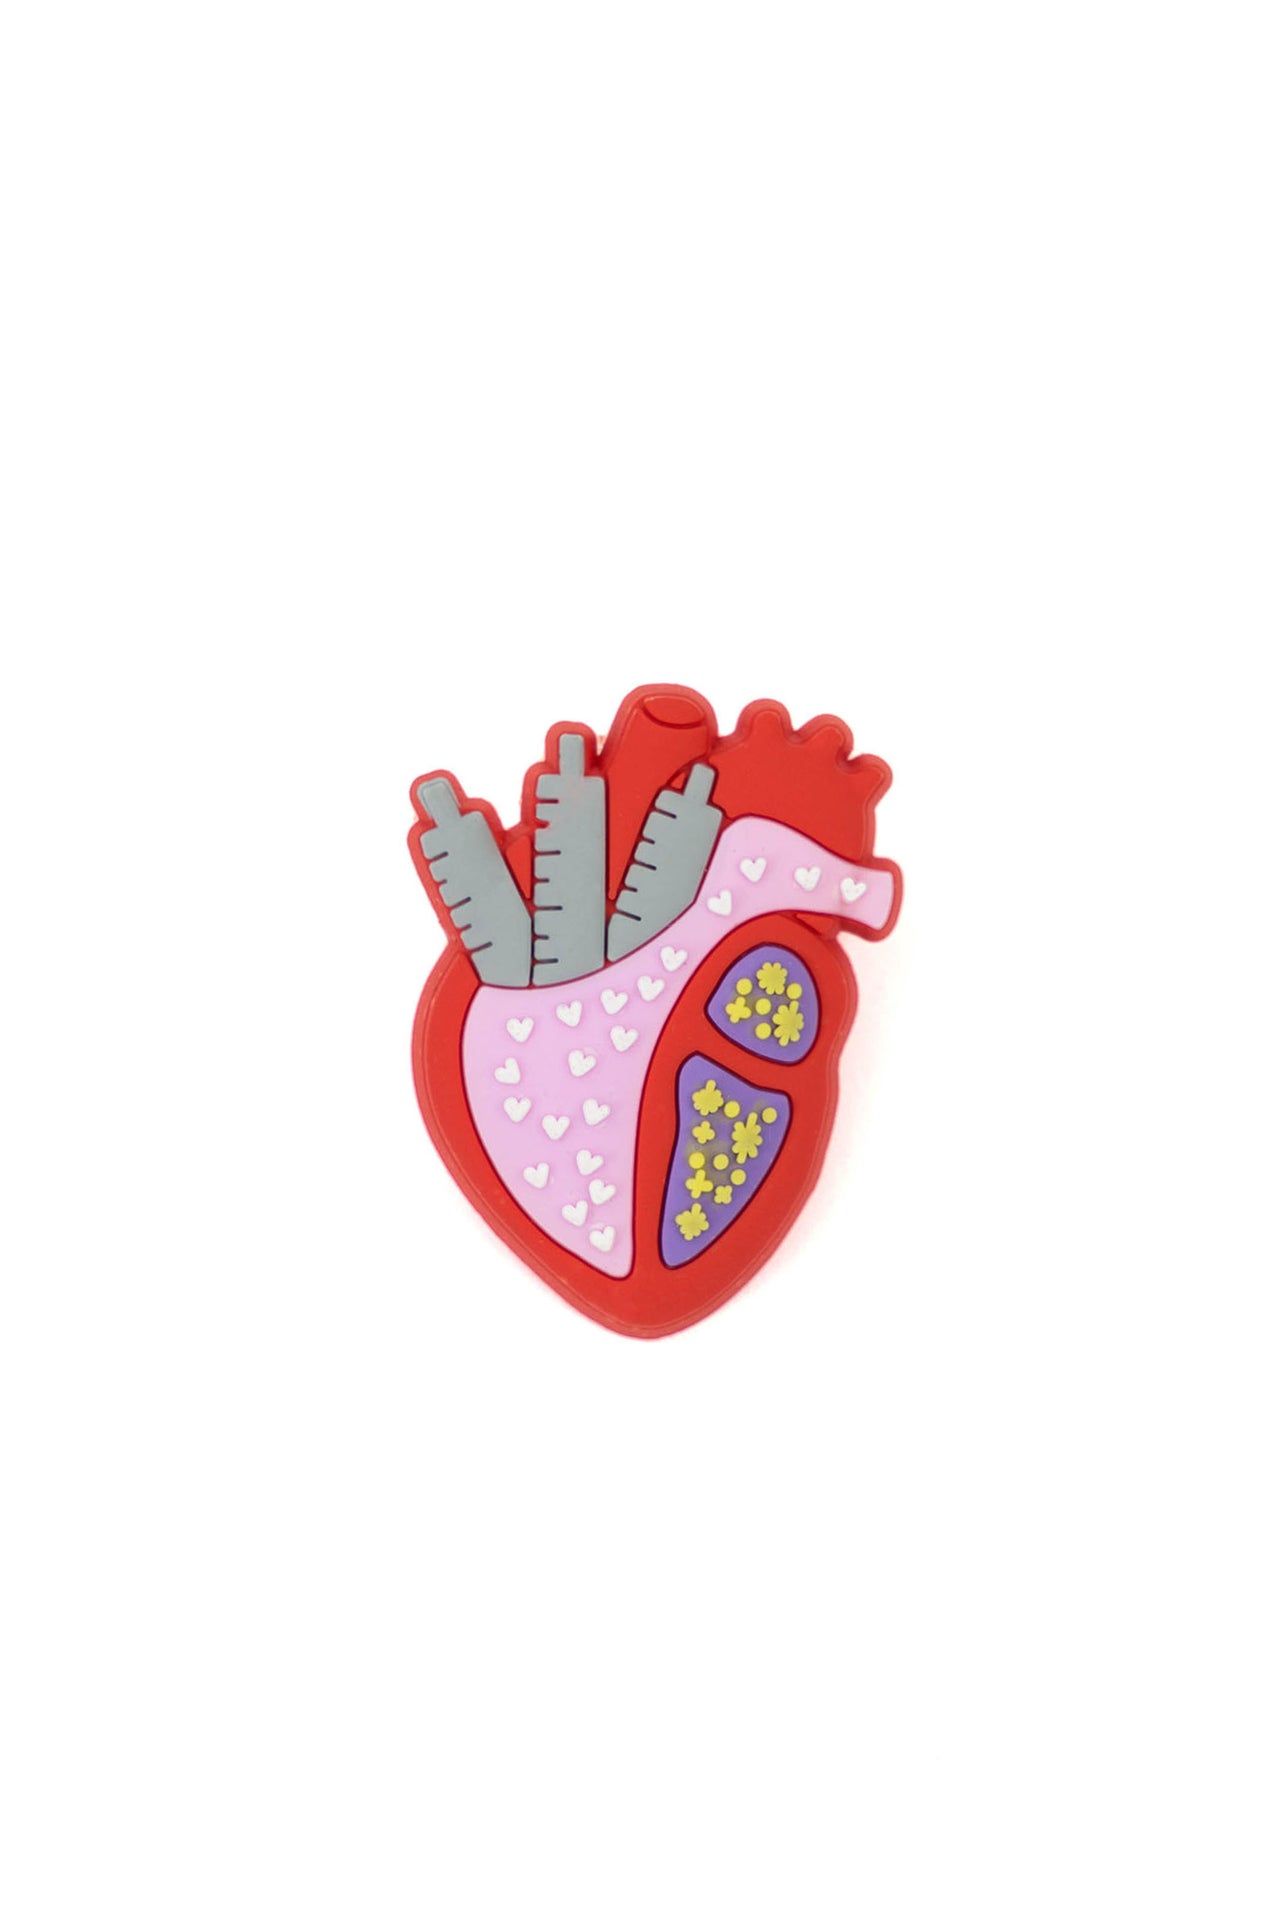 PIN "HEART"  🫀